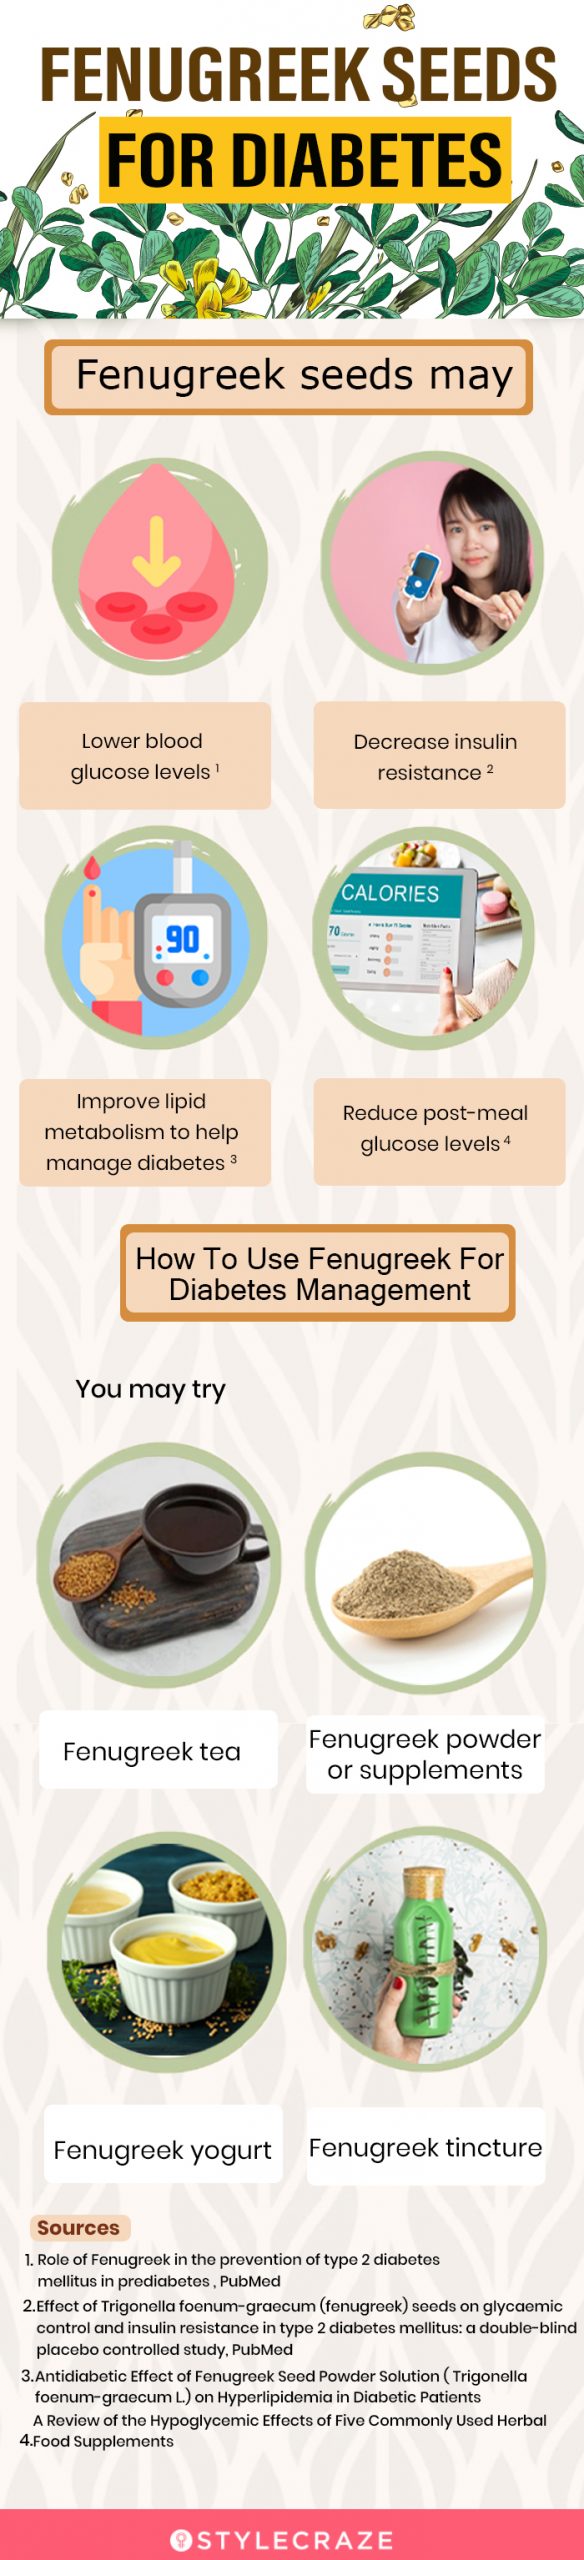 fenugreek seeds for diabetes [infographic]